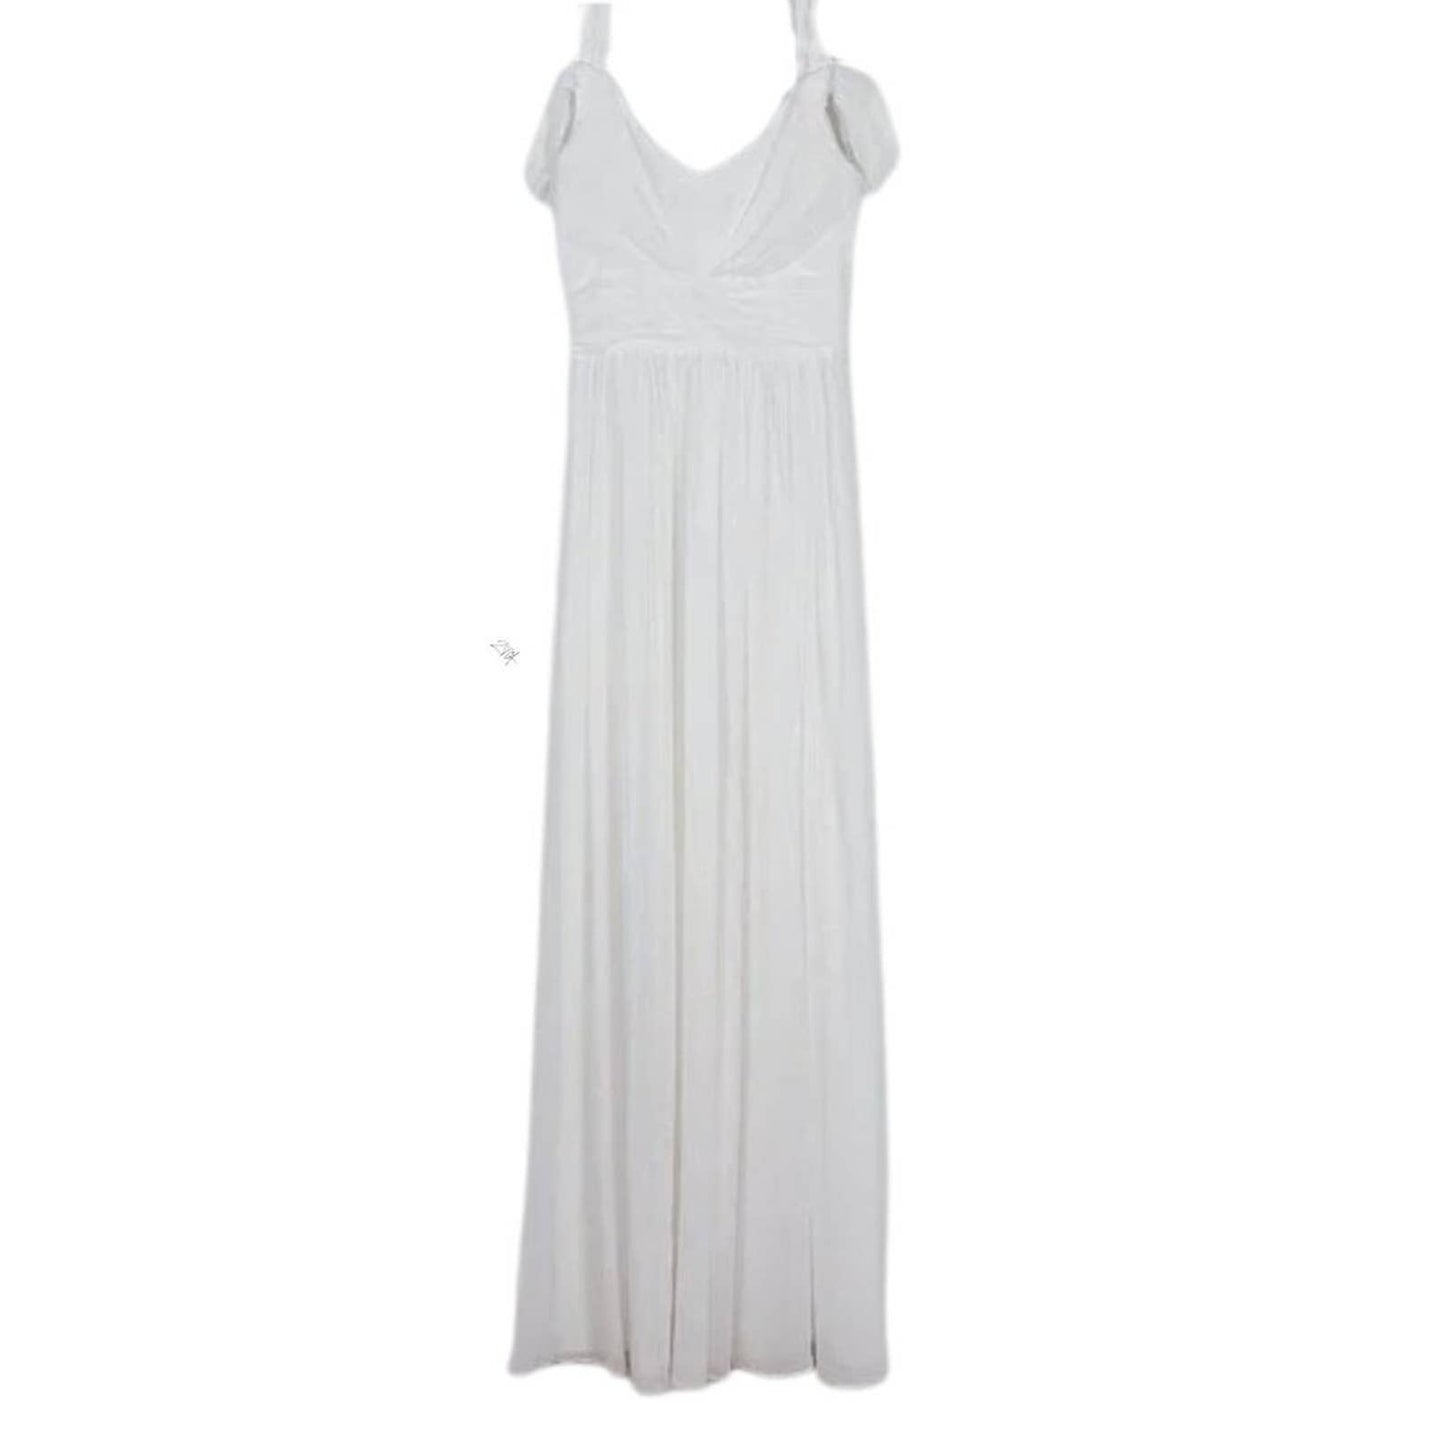 Lulu's Ocean of Elegance Maxi Dress in Ivory NWT Size XXS